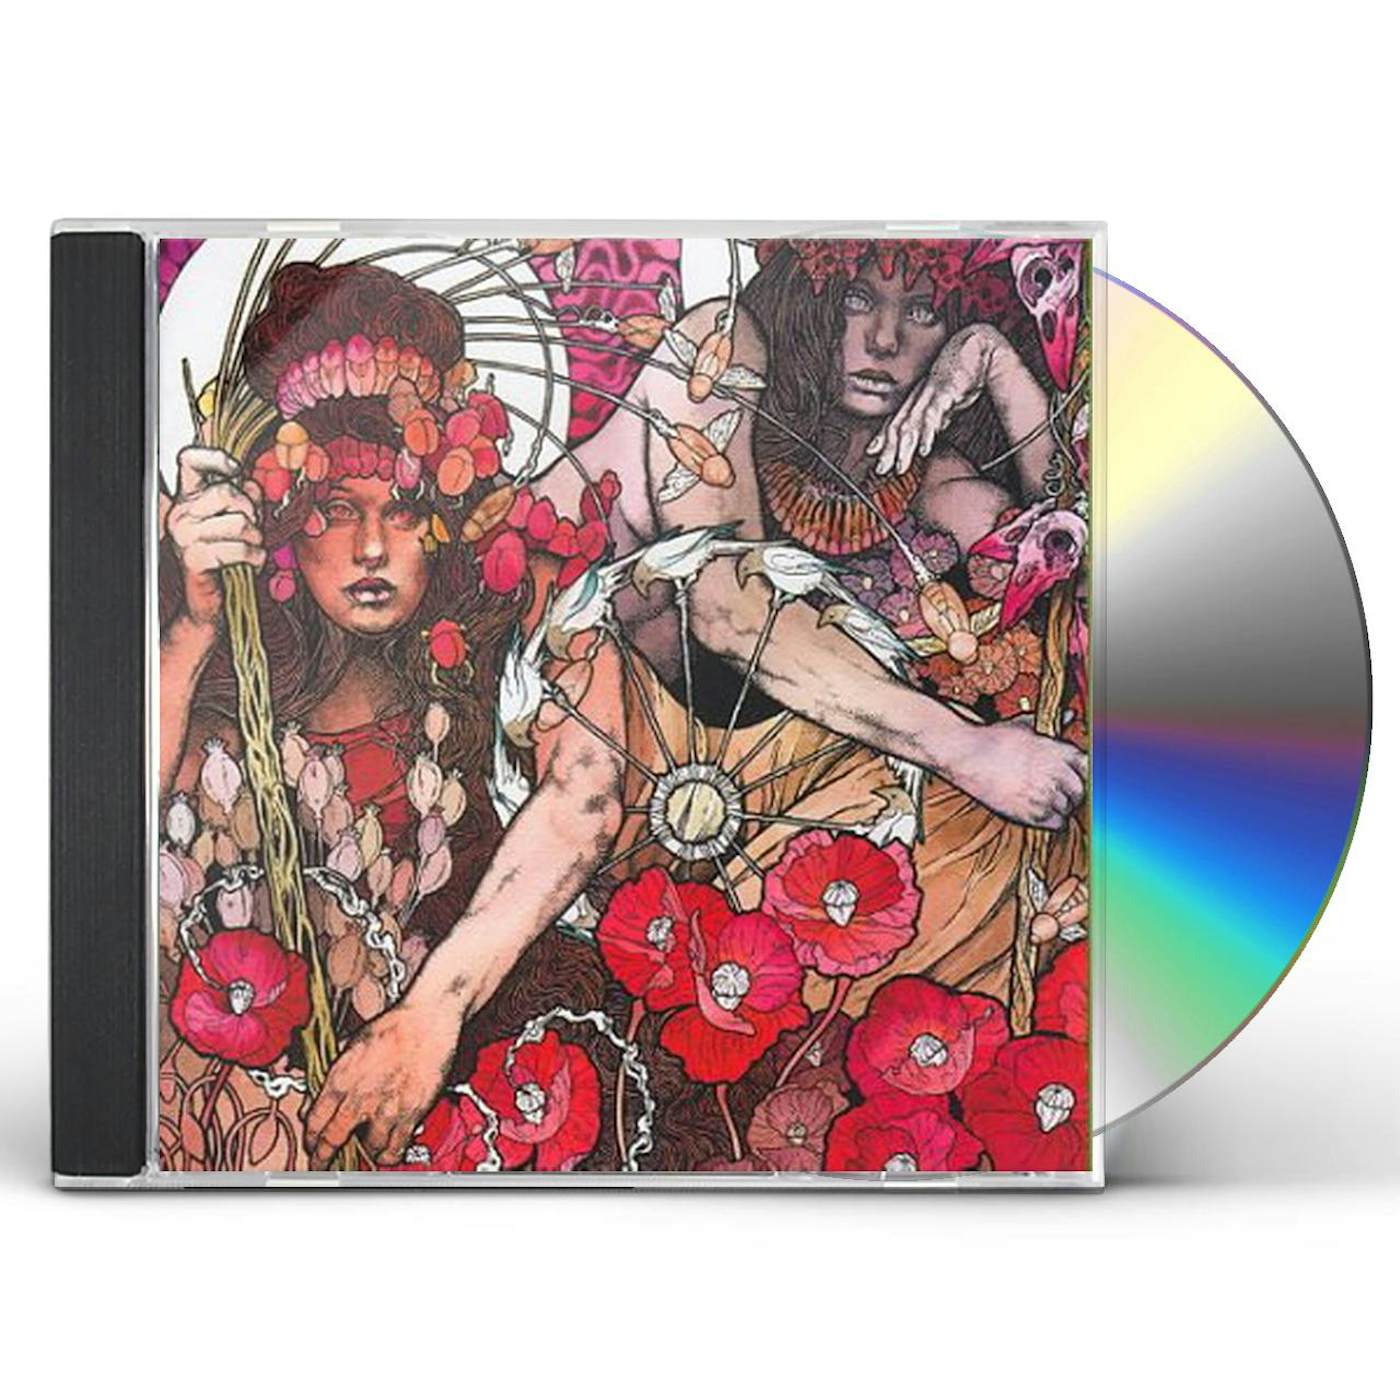 Baroness RED ALBUM CD